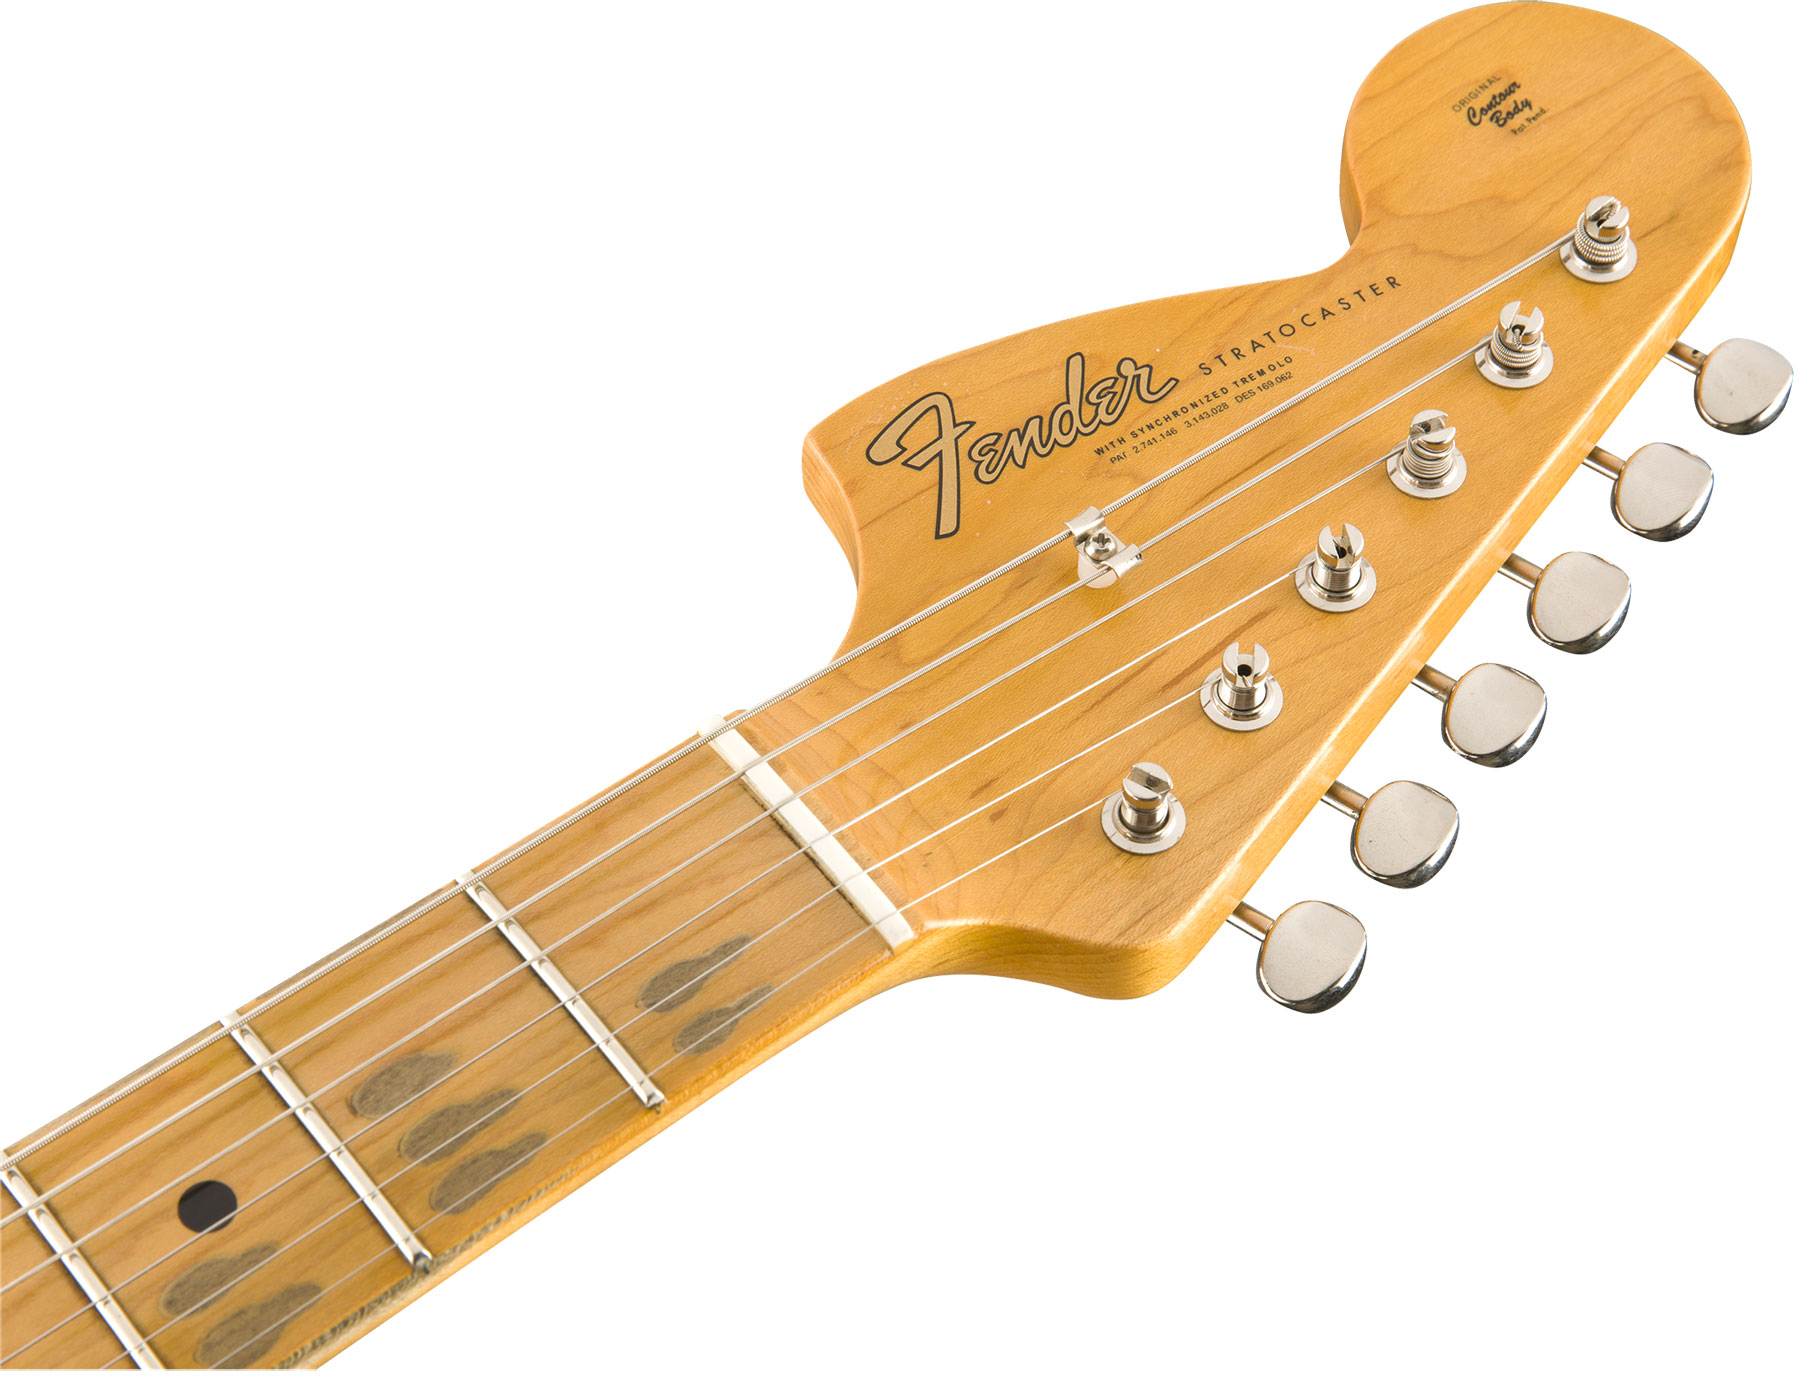 Fender Custom Shop Jimi Hendrix Strat Voodoo Child Signature 2018 Mn - Journeyman Relic Olympic White - Str shape electric guitar - Variation 3